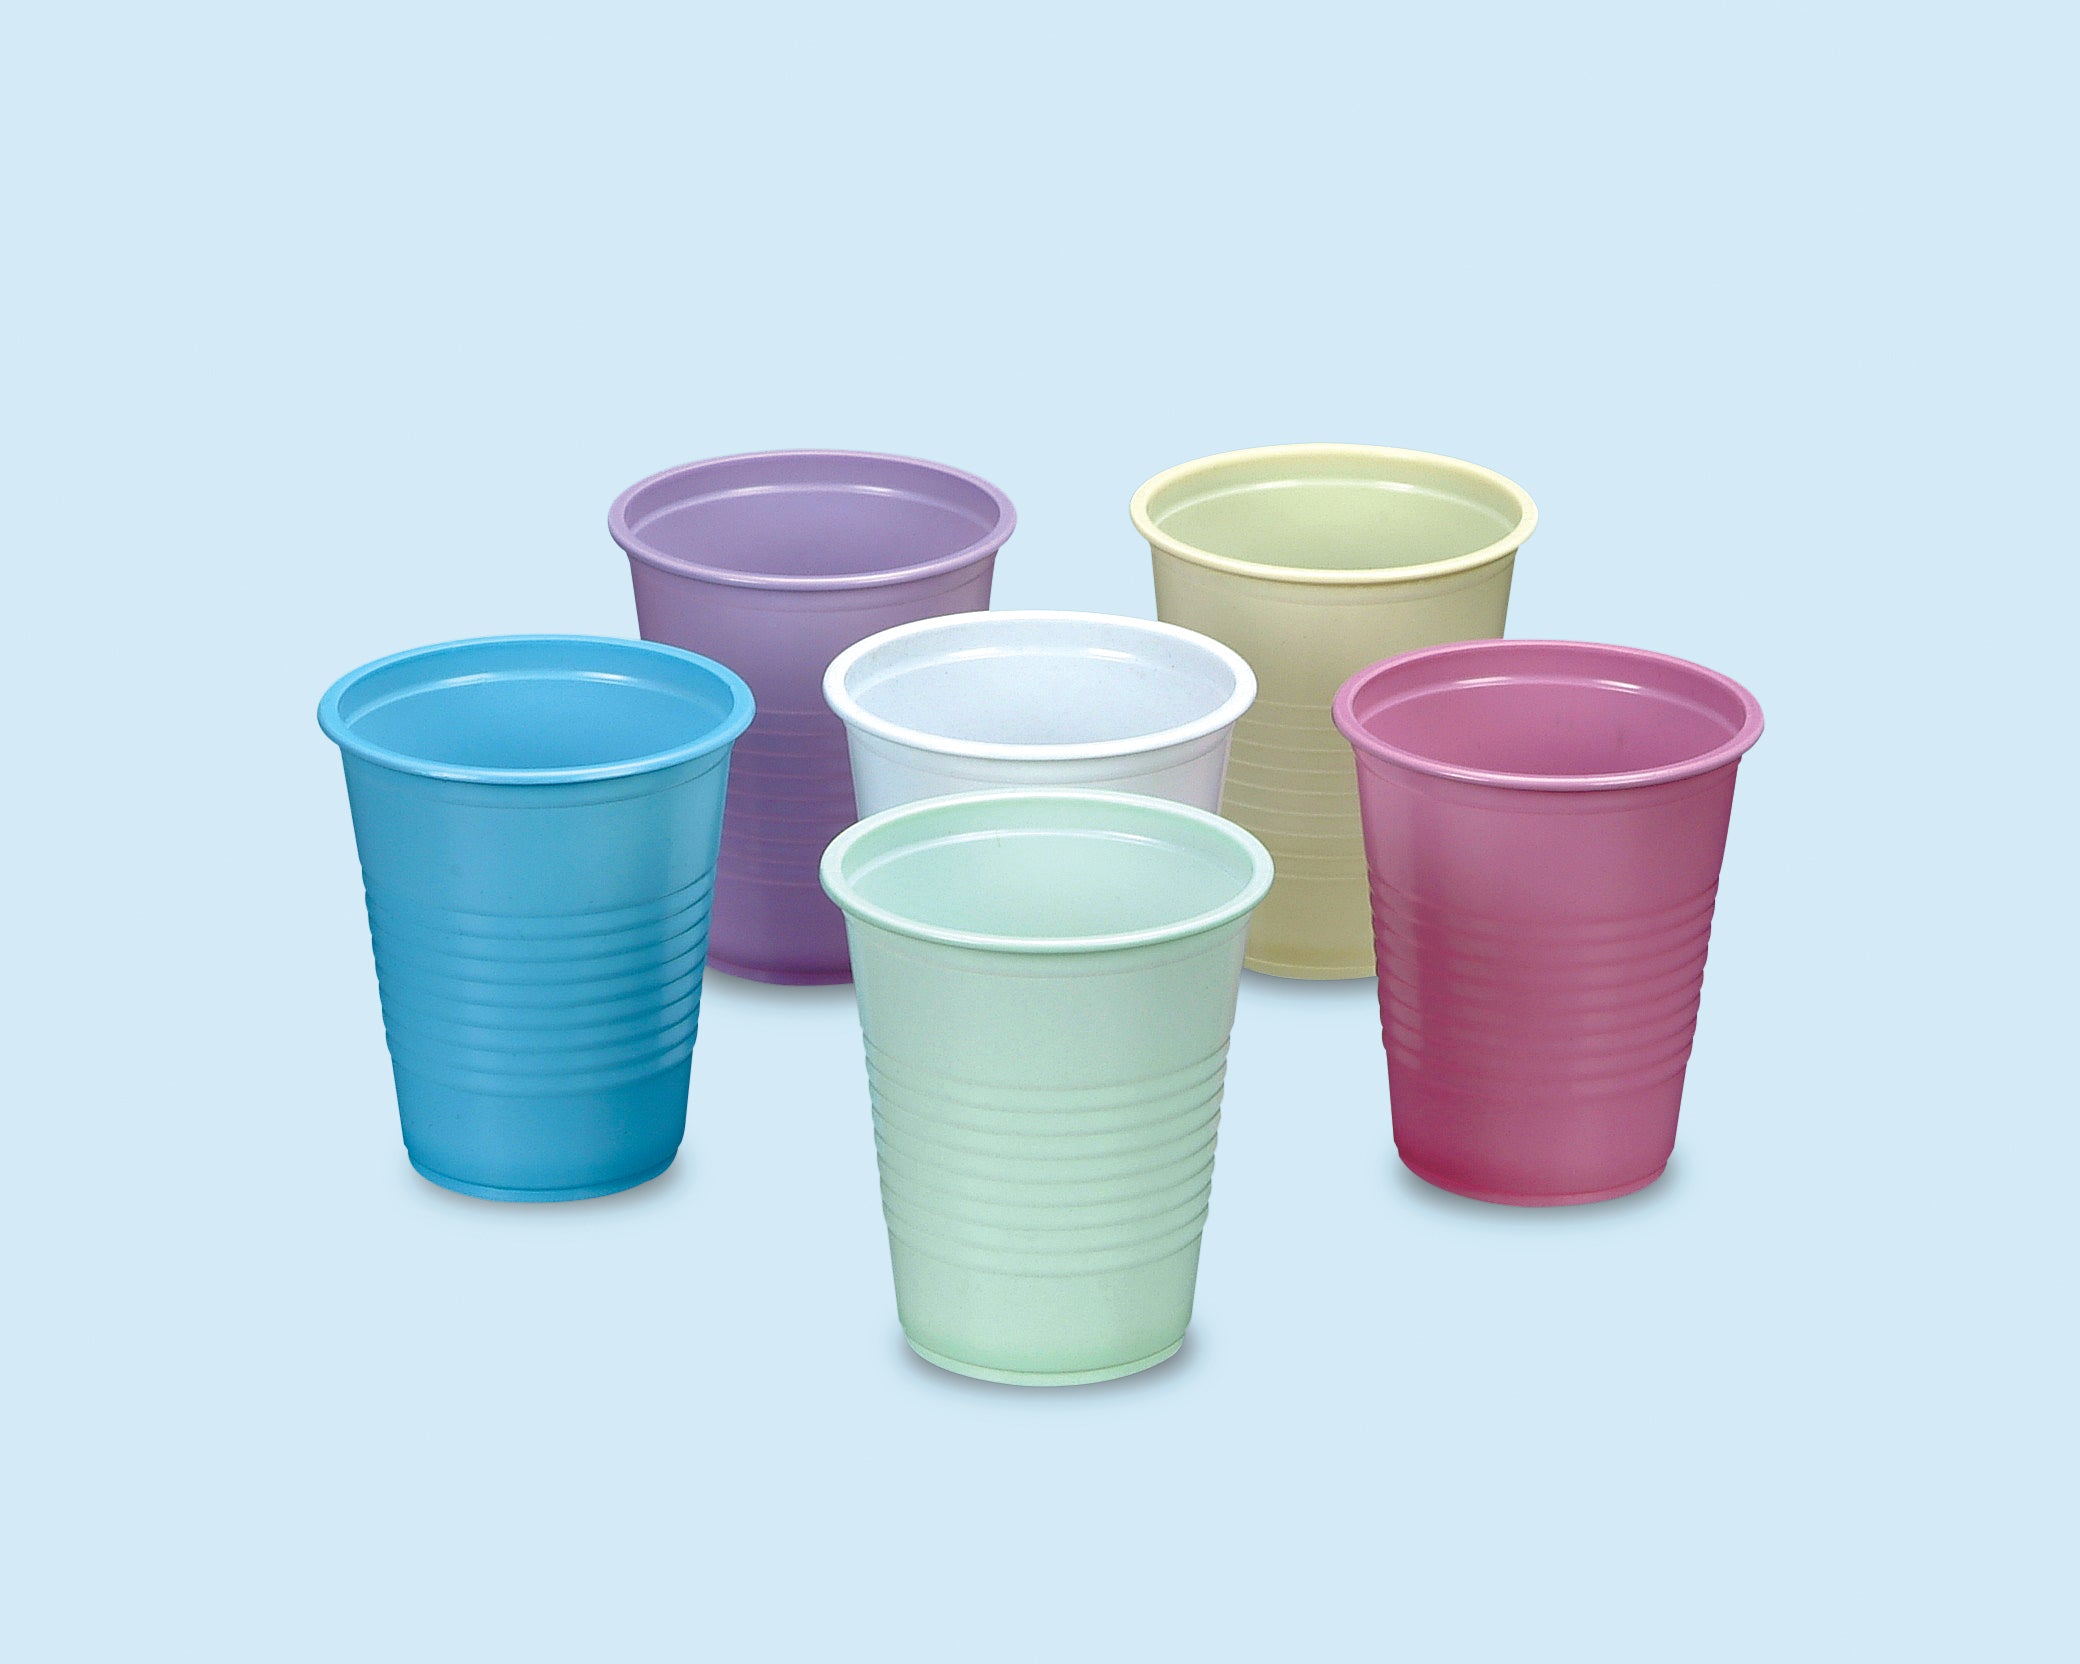 Plasdent Plastic Cups